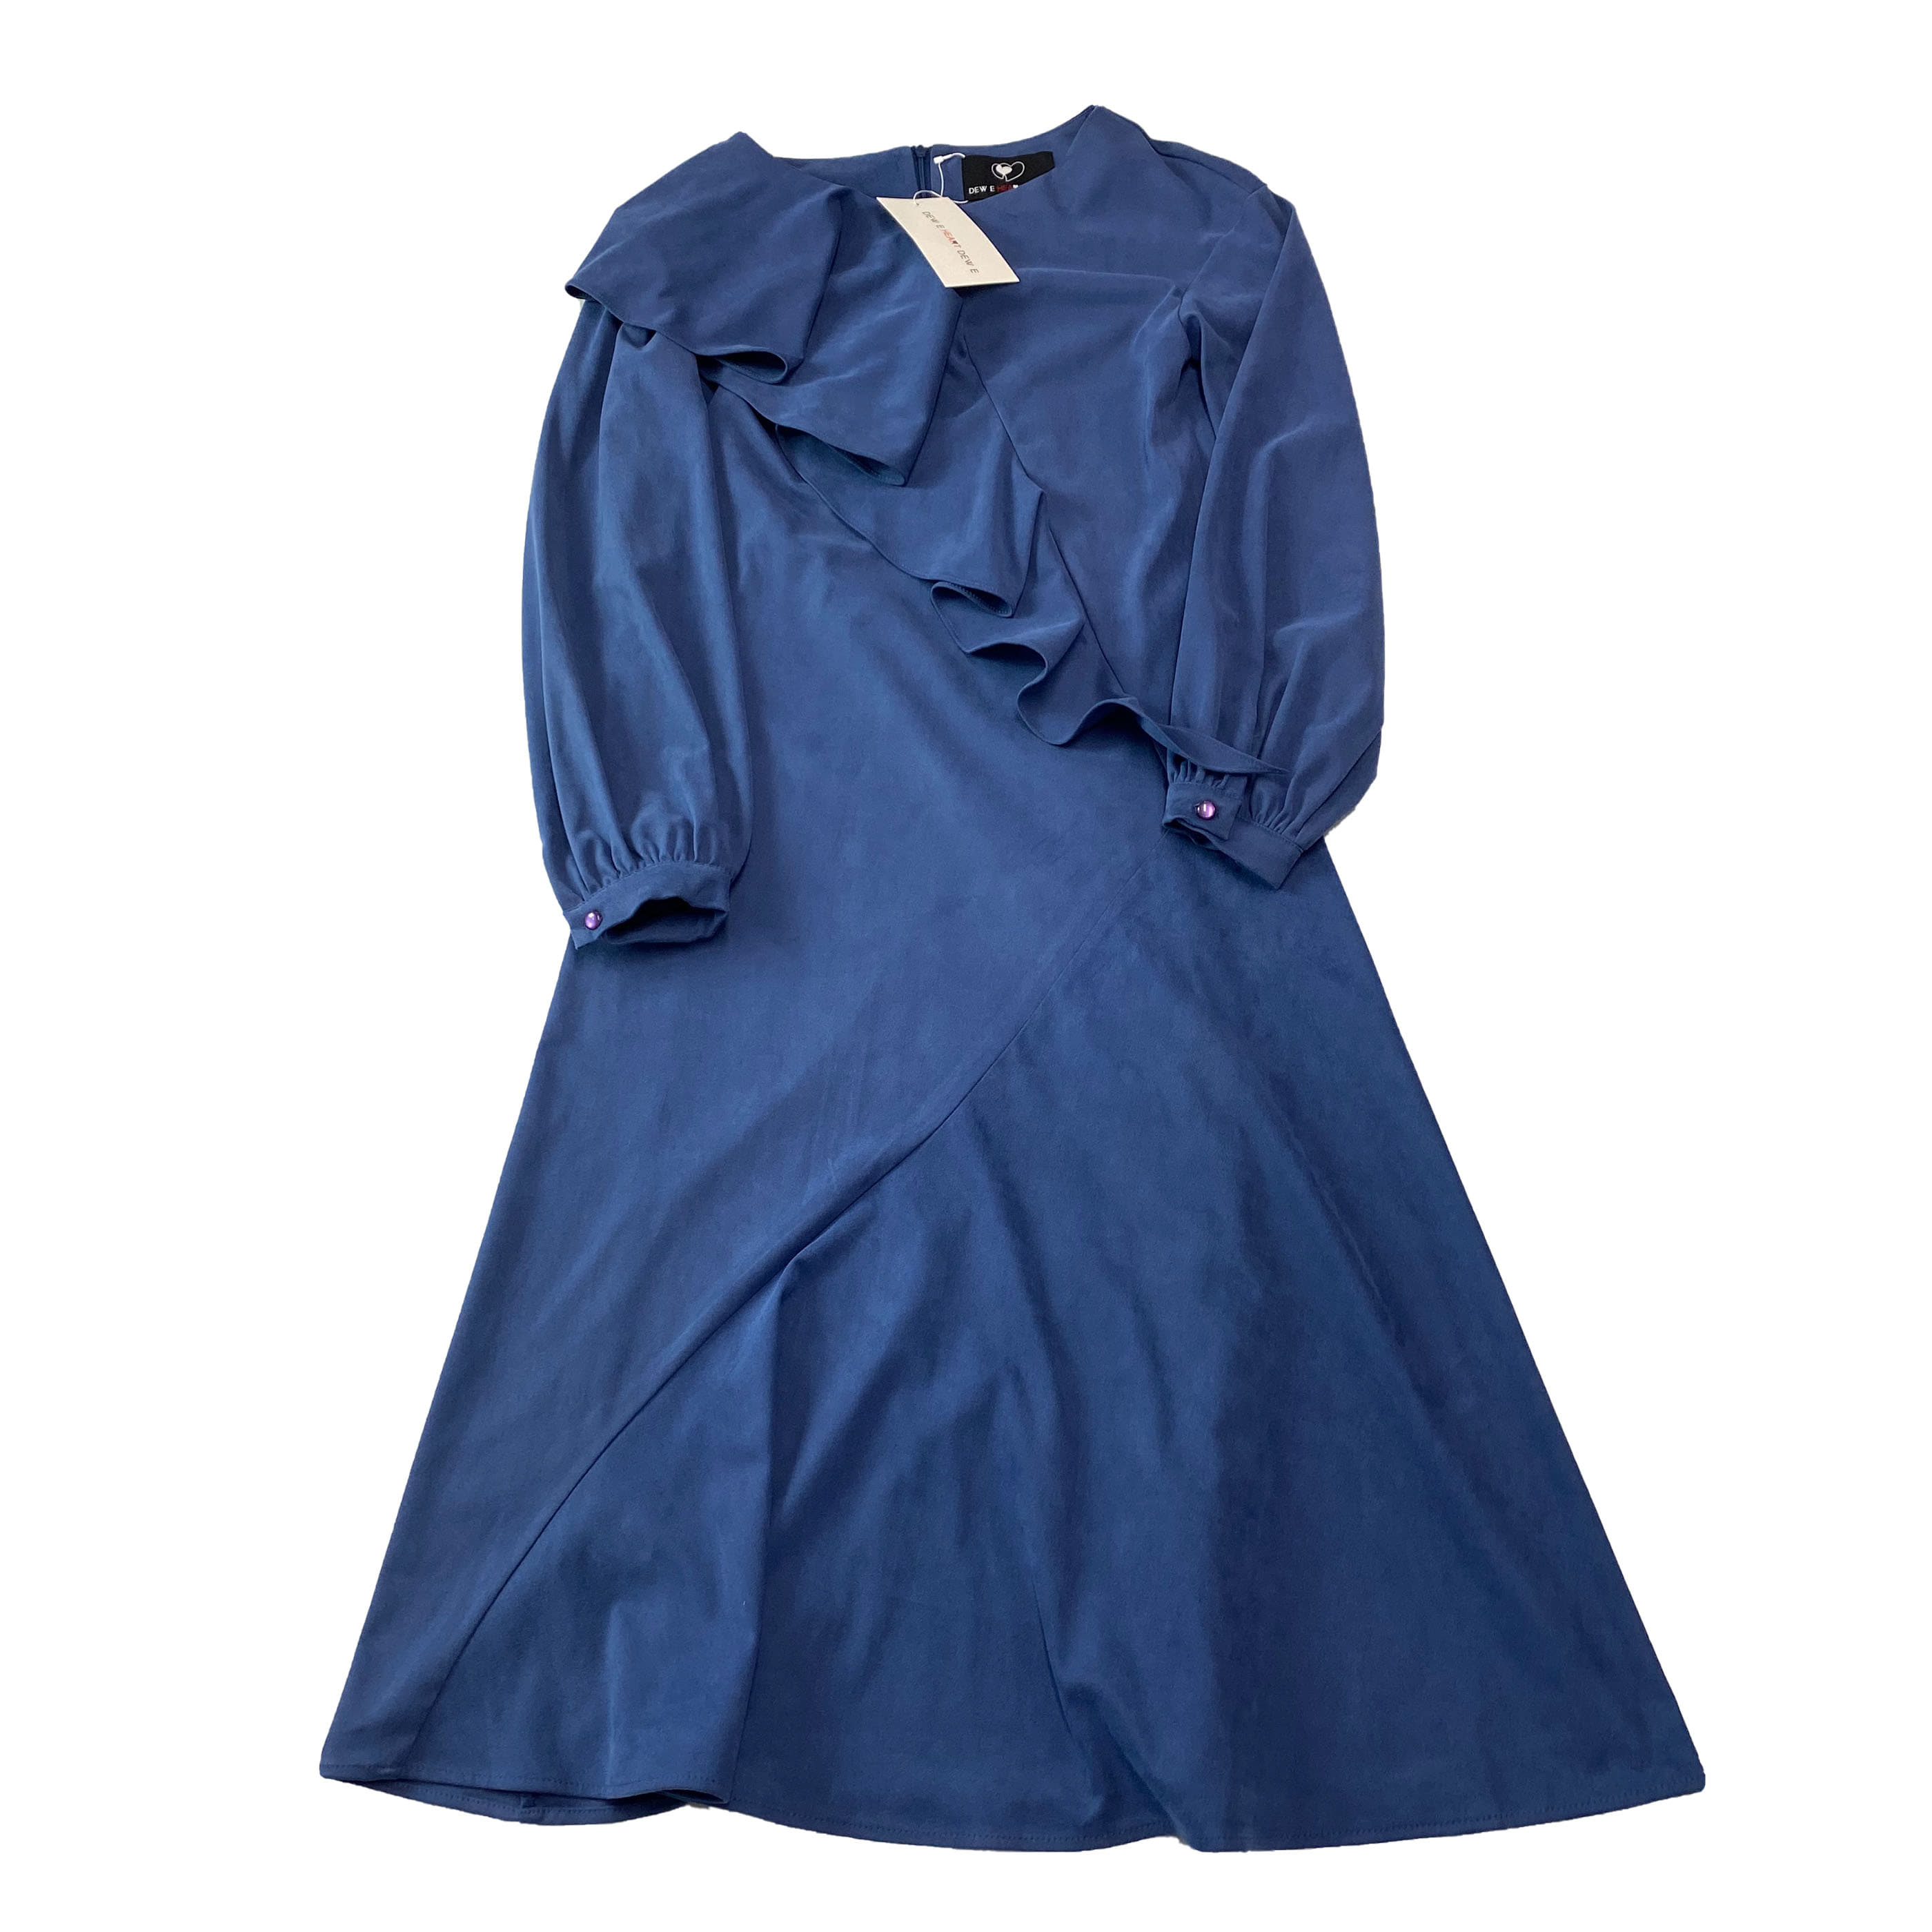 [Dew e dew e] blue ruffle dress - Size F